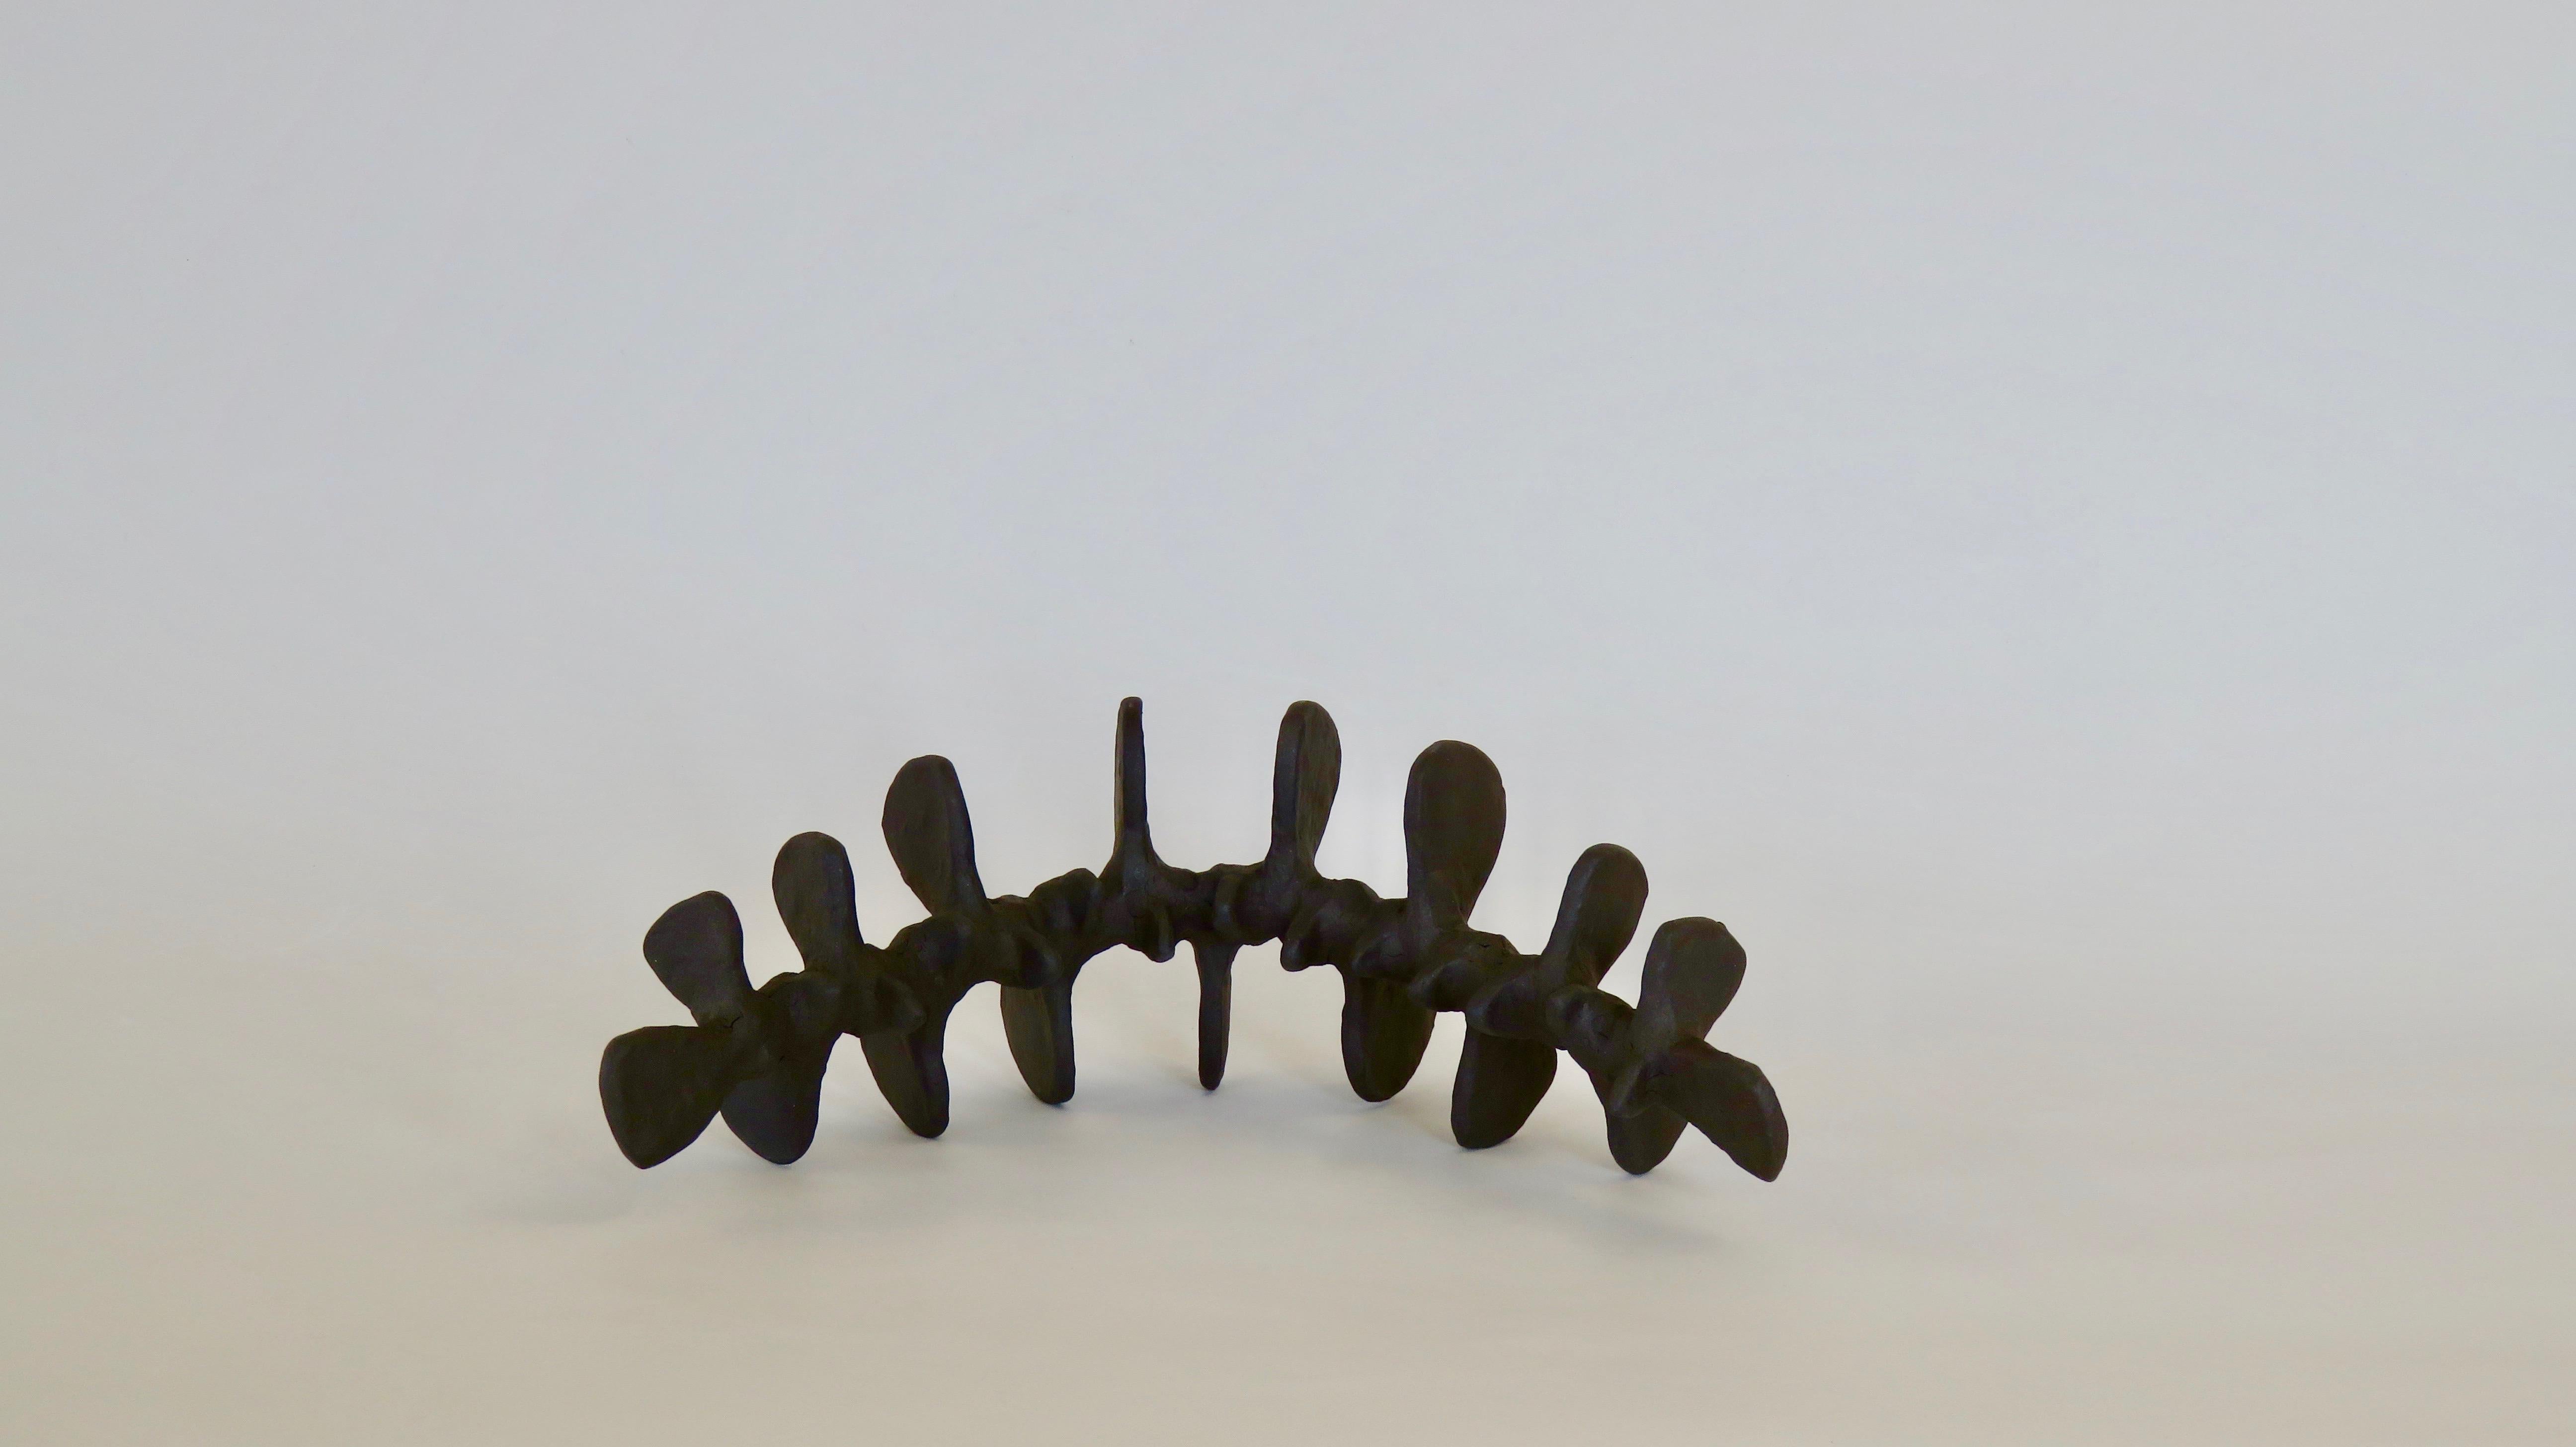 American Deep Brown Spine-Like Ceramic Sculpture in Brown Stoneware, Hand Built